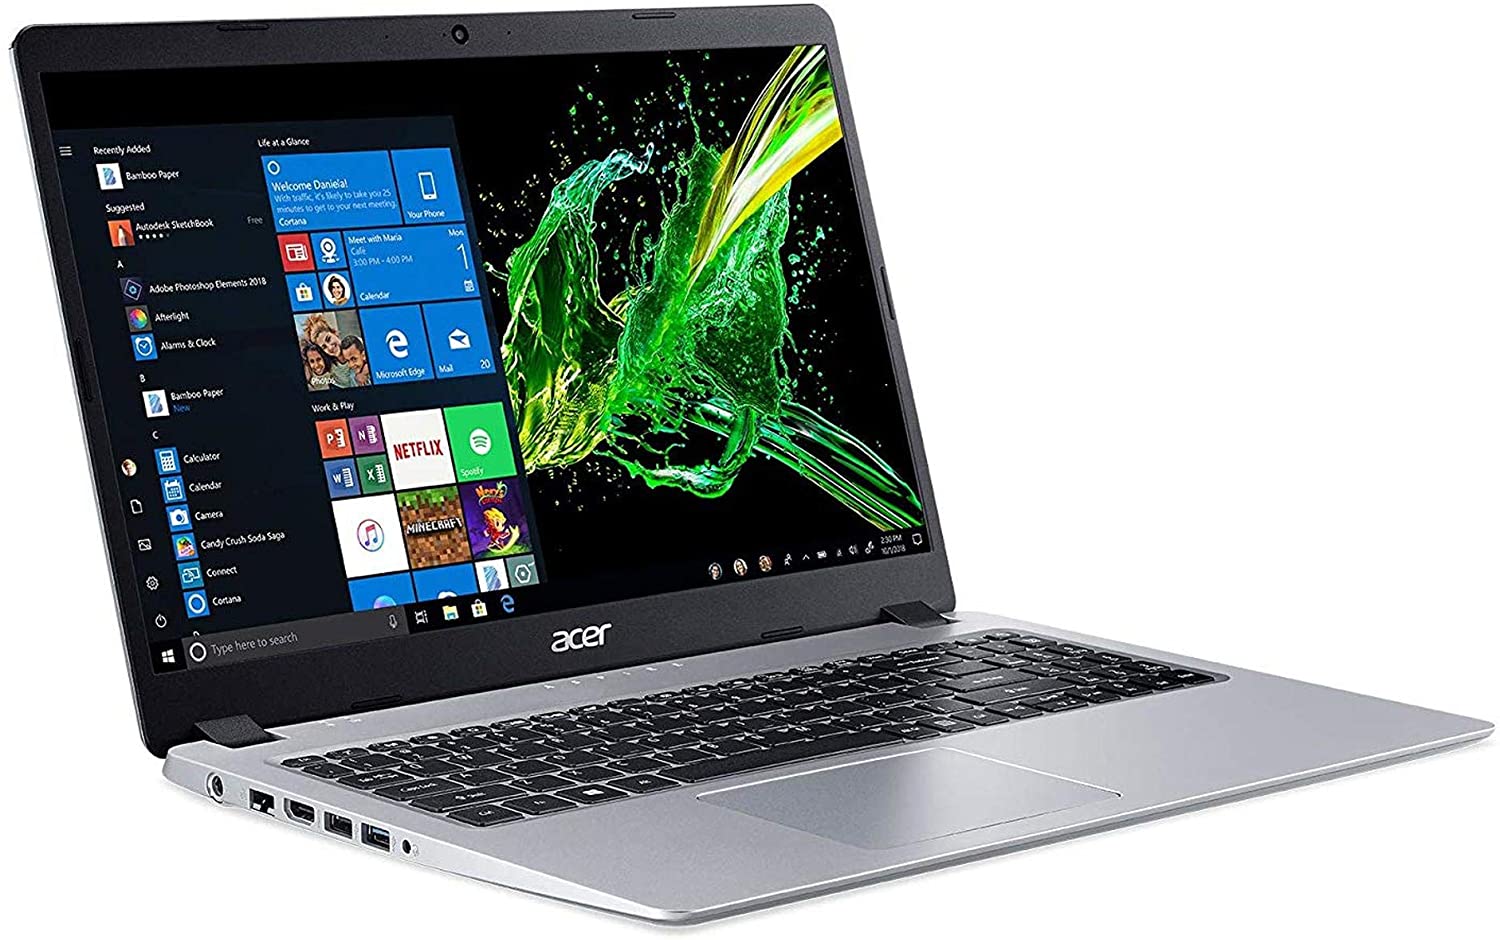 Acer Aspire 5 15.6" FHD Laptop Computer, AMD Ryzen 3 3200U Up to 3.5GHz (Beats i5-7200U), 4GB DDR4 RAM, 128GB PCIe SSD, 802.11ac WiFi, HDMI, Backlit Keyboard, Silver, Windows 10 Home in S Mode - image 2 of 6